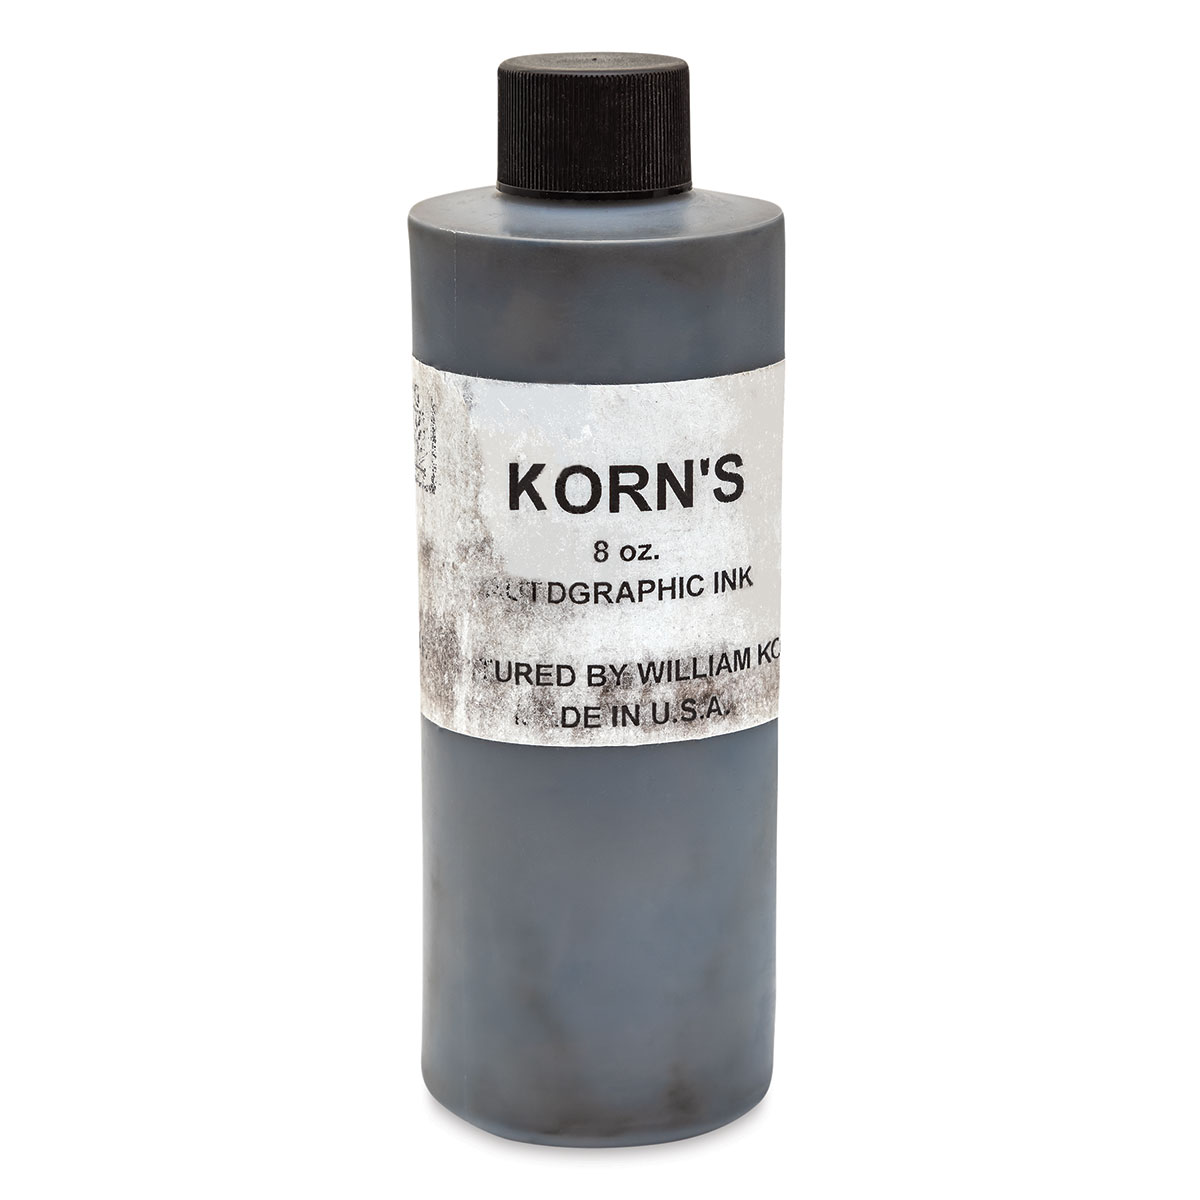 Korn's Autographic Ink - 8 oz